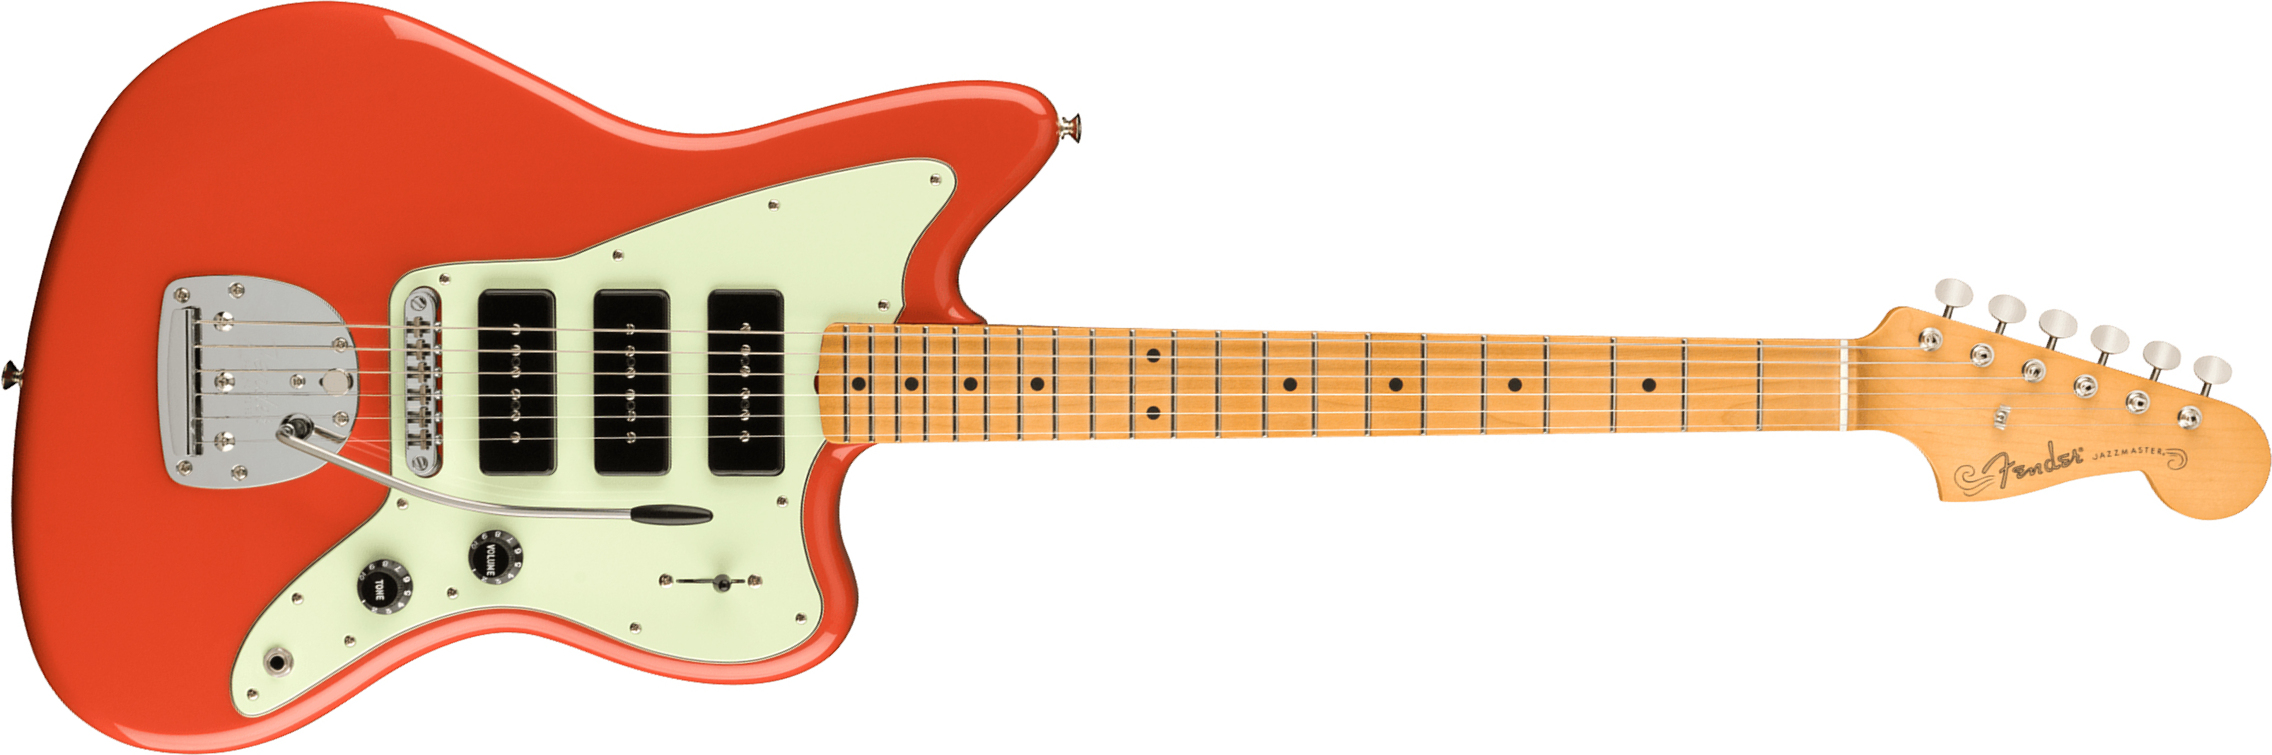 Fender Jazzmaster Noventa Mex Sss Mn +housse - Fiesta Red - Guitarra electrica retro rock - Main picture